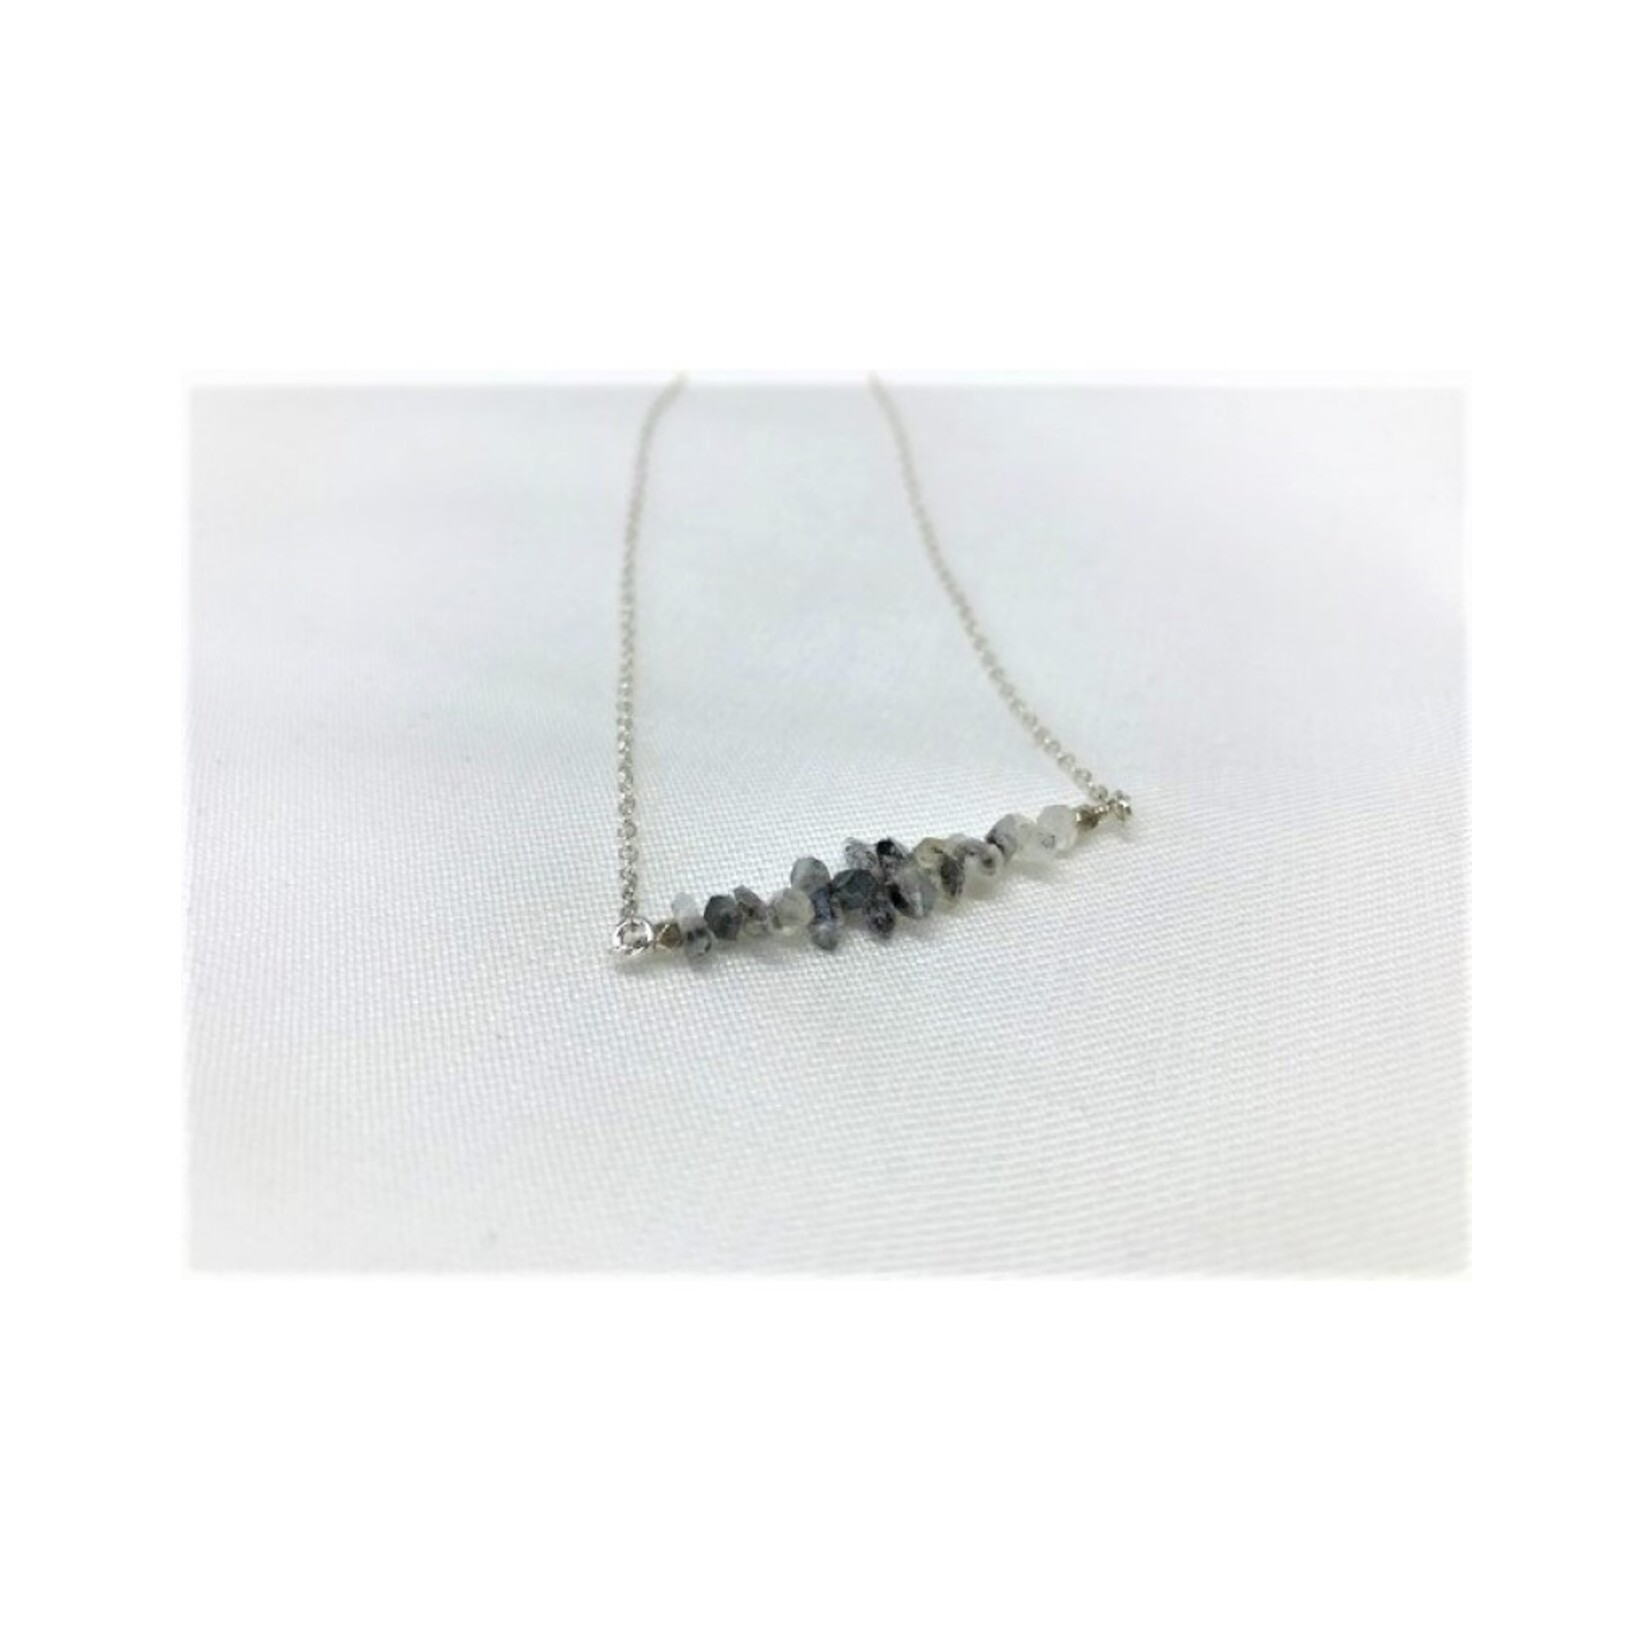 Gemstone Bar Necklace - Herkimer Diamond